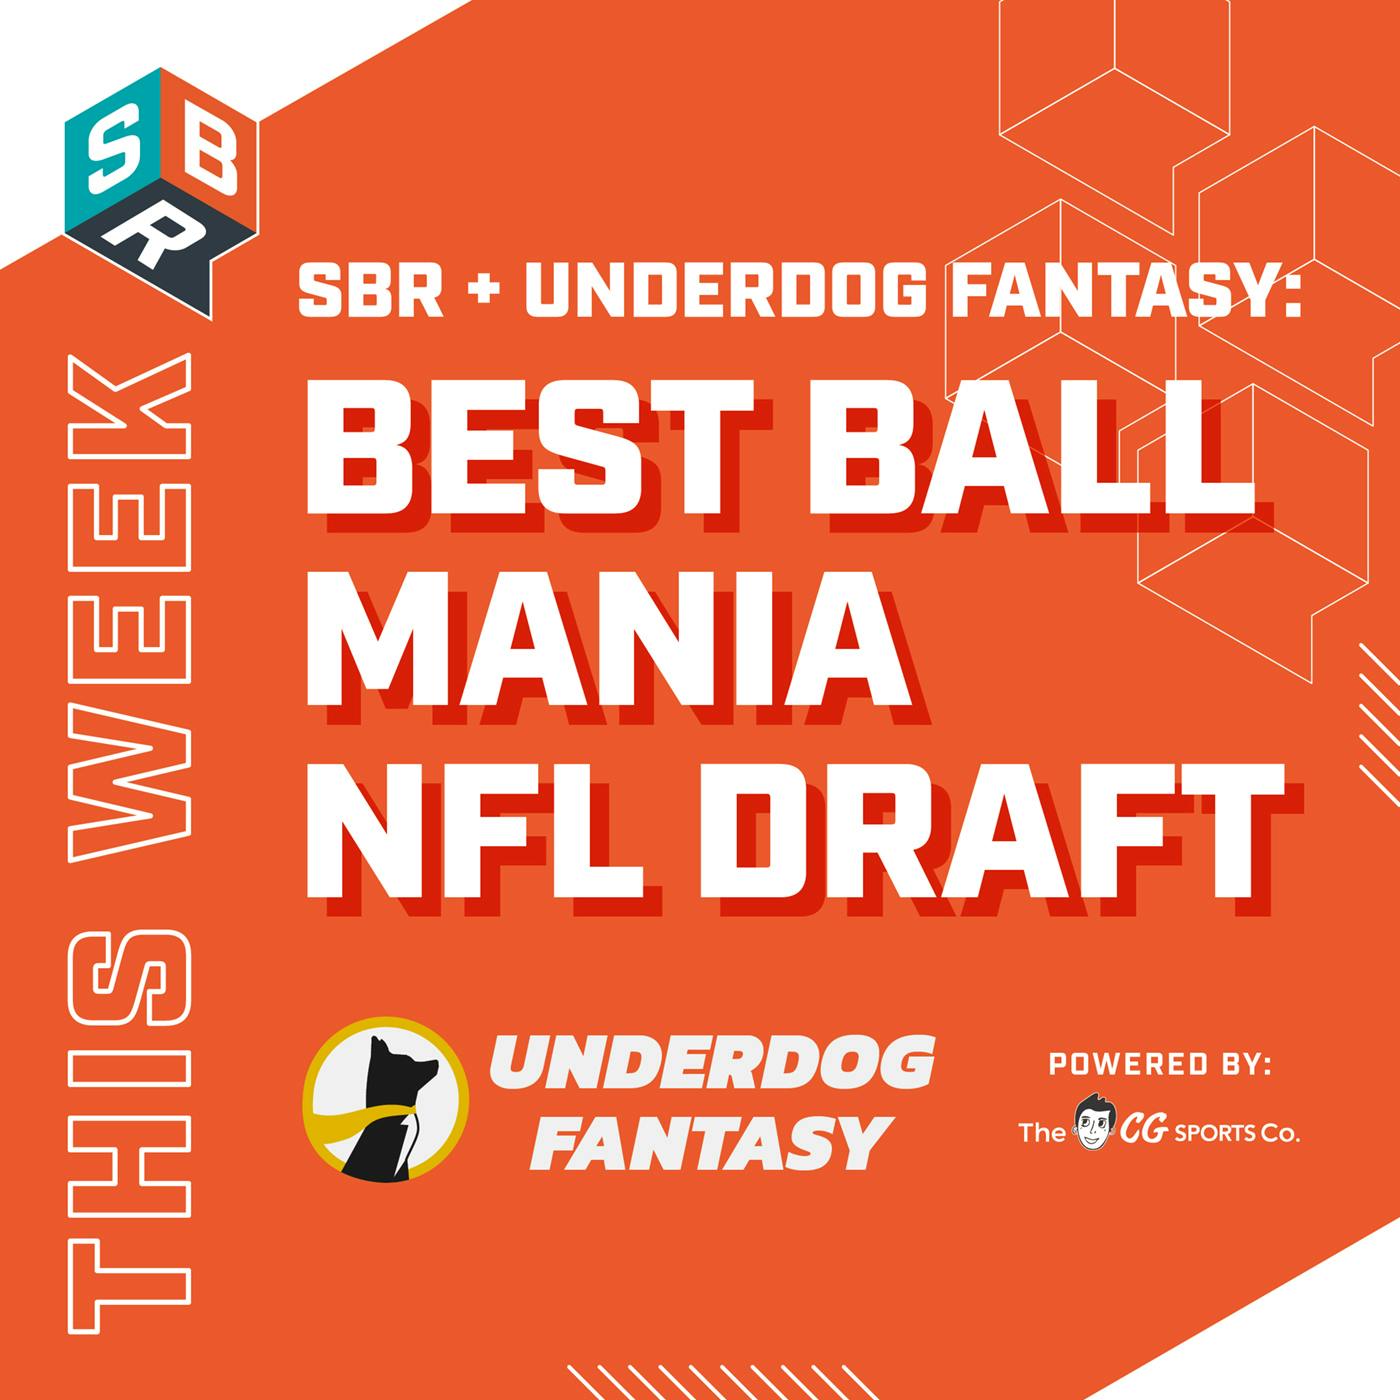 Sports Business Radio - Underdog Fantasy Best Ball Mania IV Draft